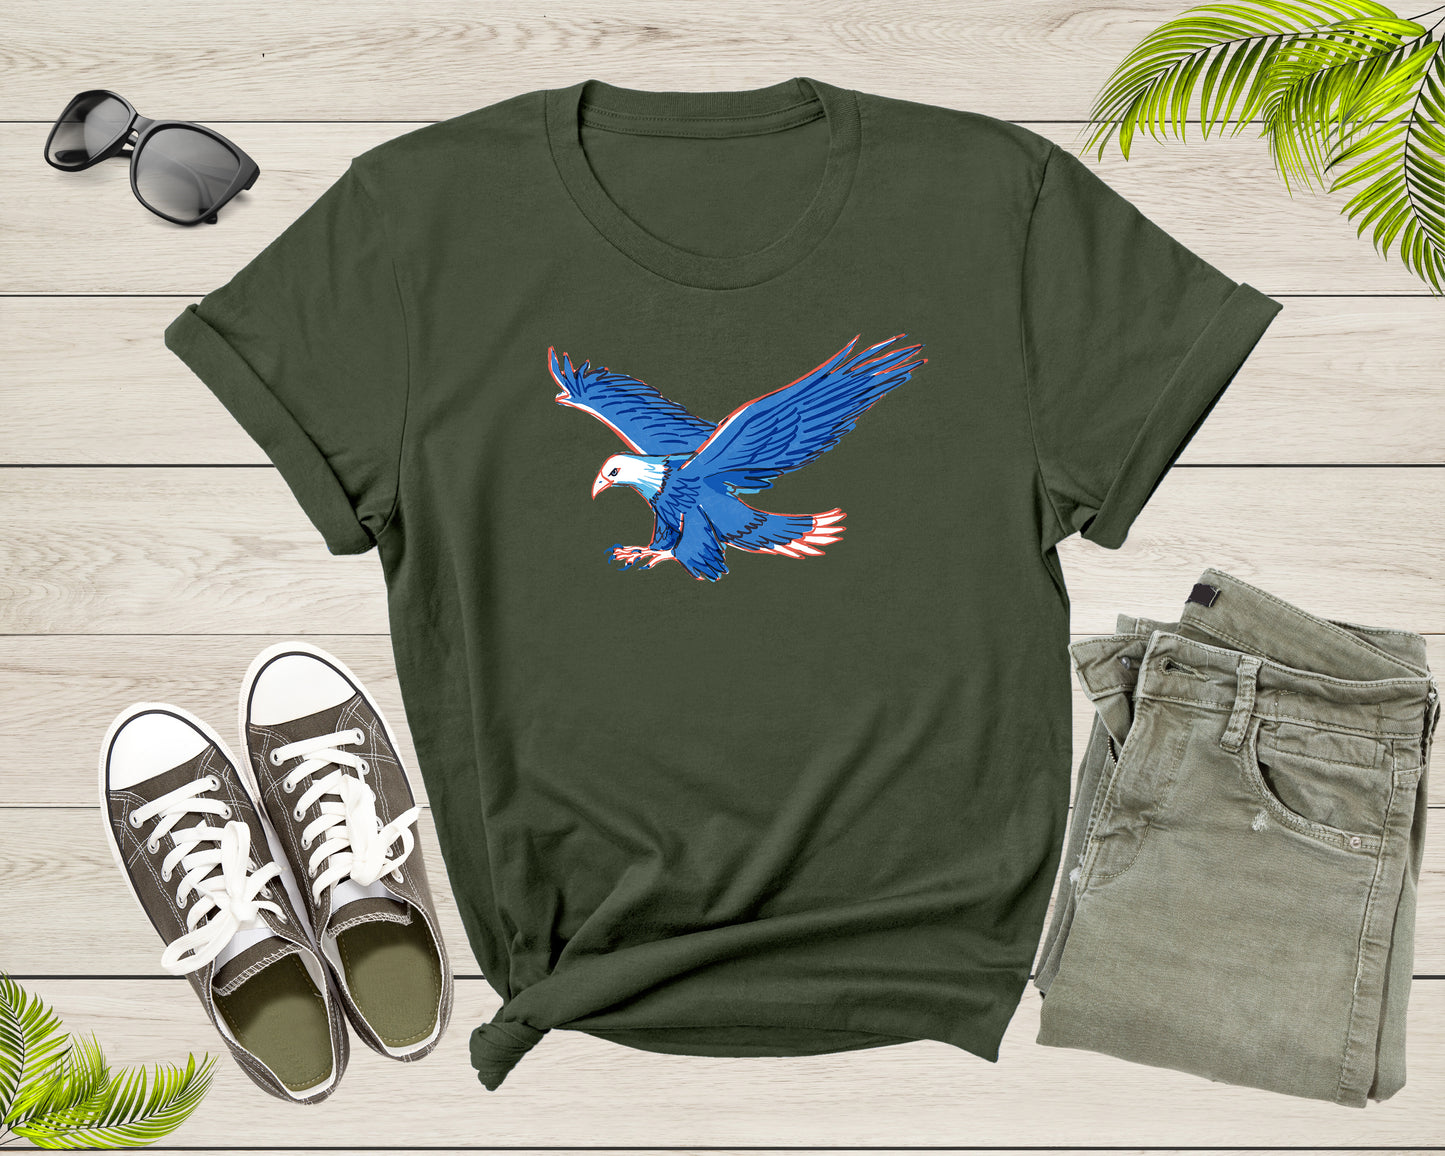 Flying Bald Eagle Flying Bird Hawk Wild Animal Retro Hunting T-Shirt Soaring Eagle Gift T Shirt for Men Women Kids Boys Girls Graphic Tshirt